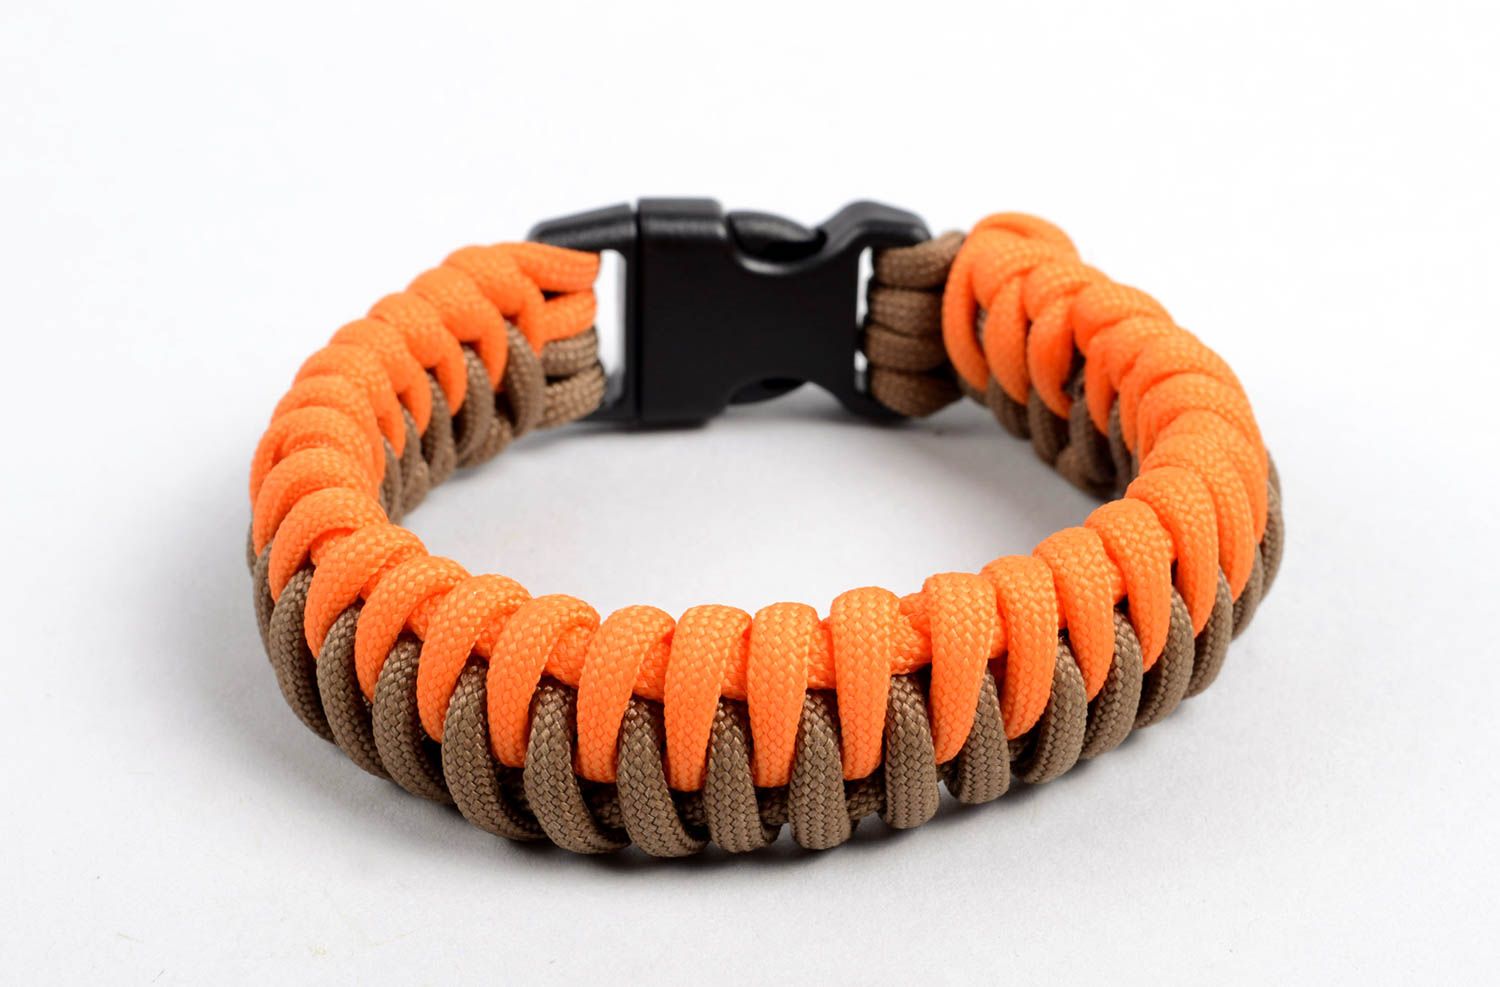 Unusual handmade woven bracelet cord bracelet designs survival tips gift ideas photo 1